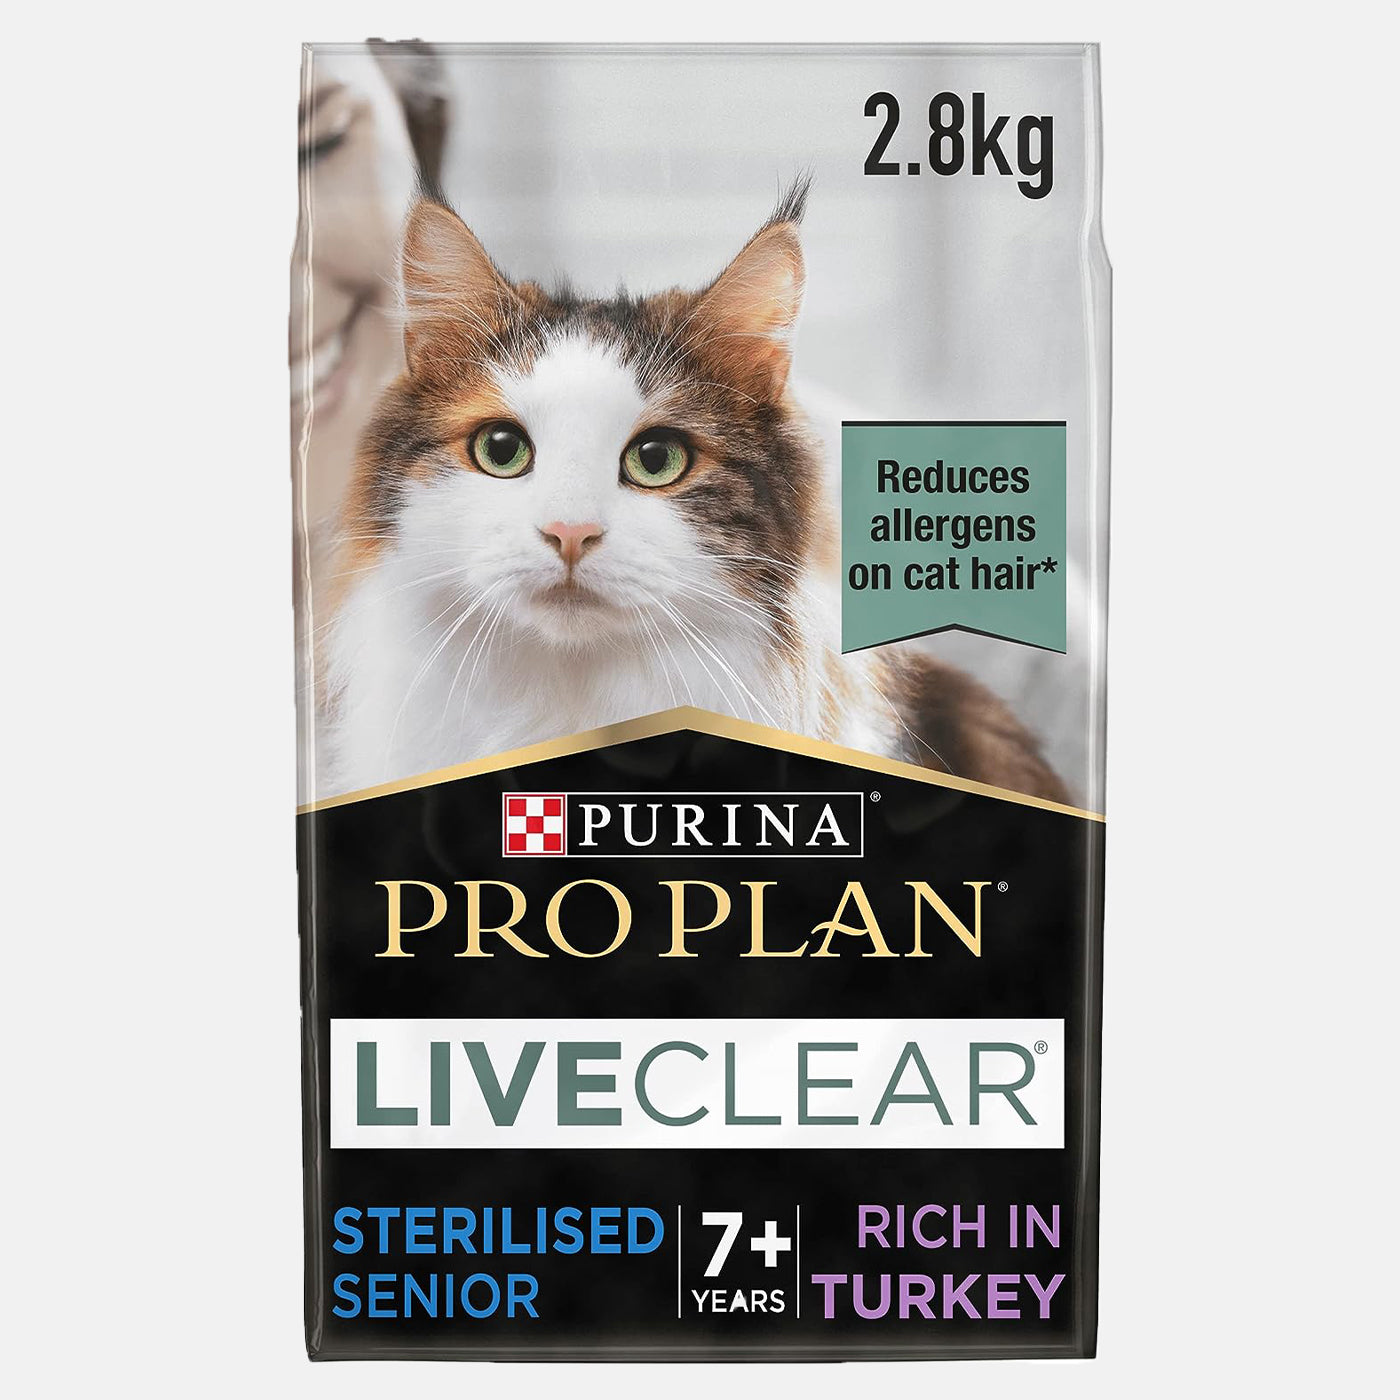 PRO PLAN Live Clear Sterilised 7+ Senior Cat Dry Food with Turkey 2.8kg